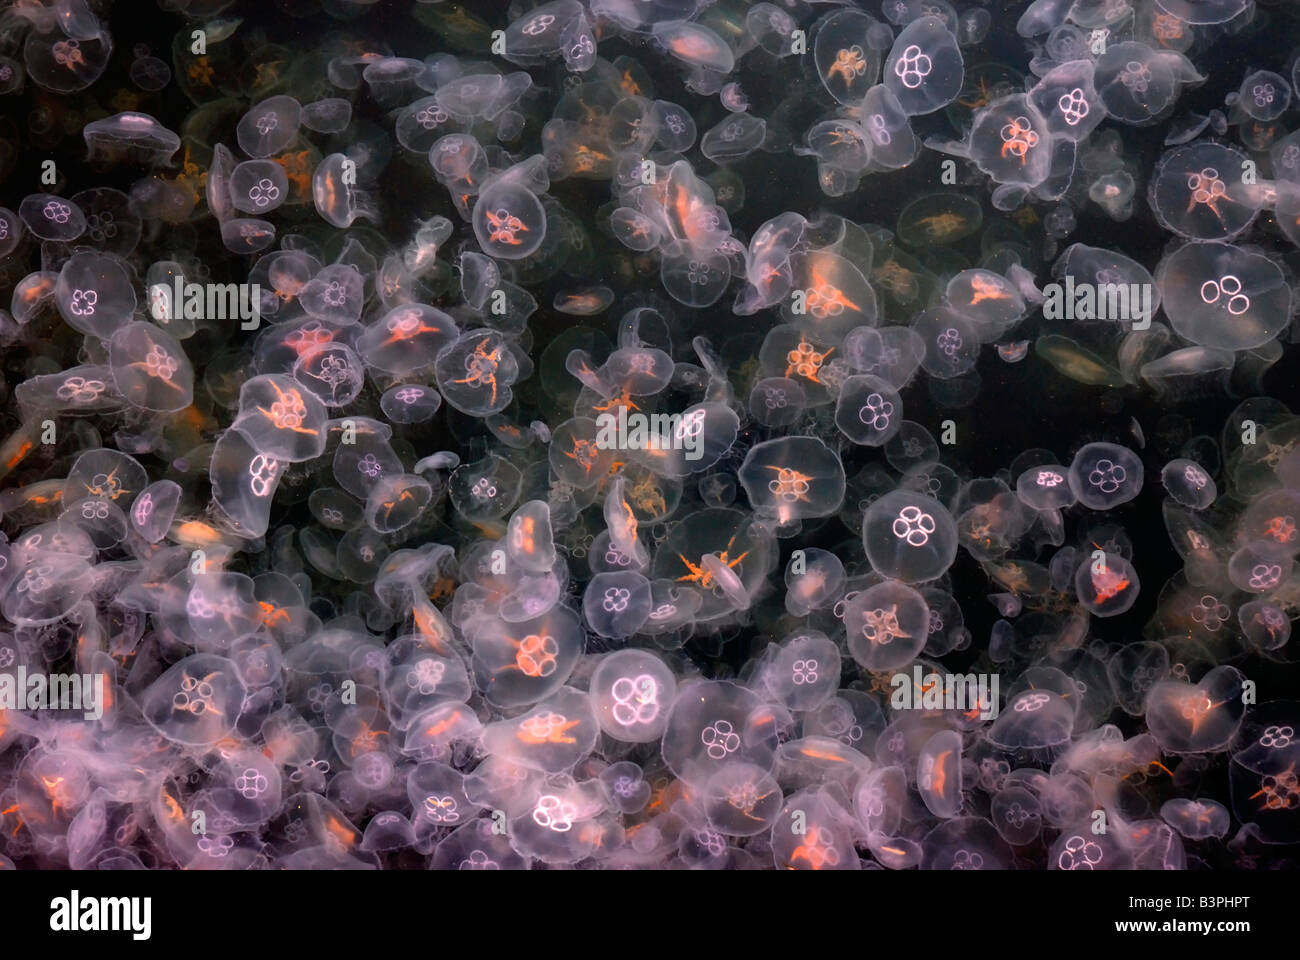 Mass of Crystal Jellyfish or Moon Jellyfish (Aurelia aurita), Kiel Fjord, Germany, Europe Stock Photo